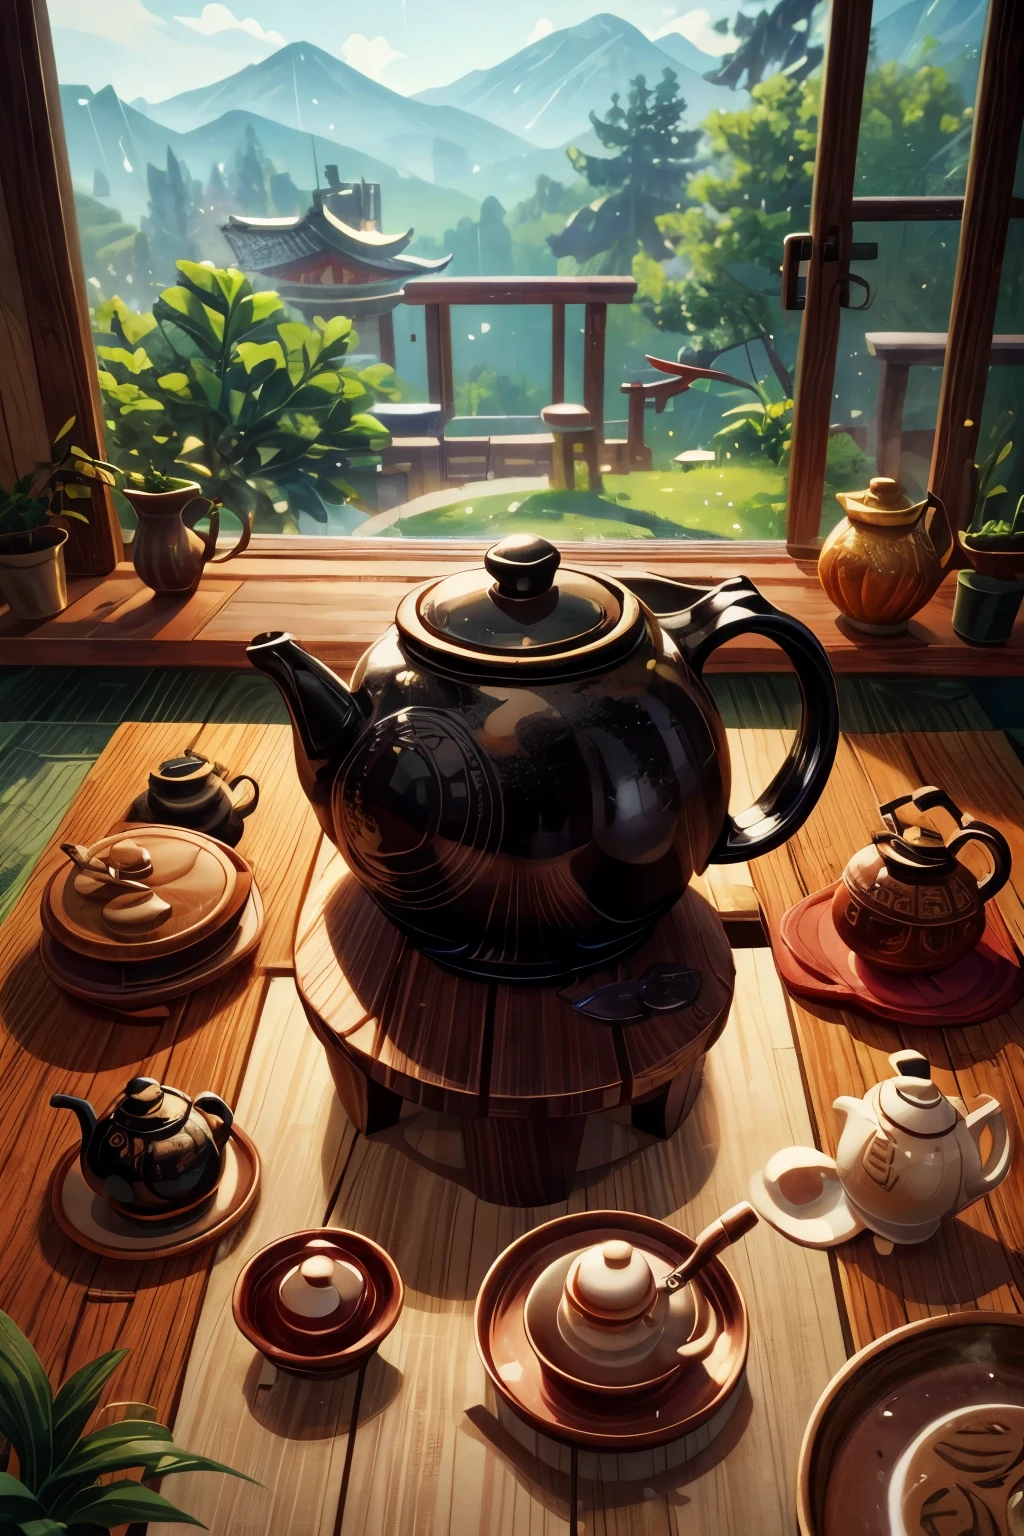 On the bowl is placed a tetera, inspirado en Sesshū Toyo, pava, large black pava on the hearth, tetera, tetera, tetera, precioso juego de té de porcelana, tetera: 1, inspirado en Renzheng Doben, inspirado en el emperador Xuande, cerámica, smooth glazed cerámica